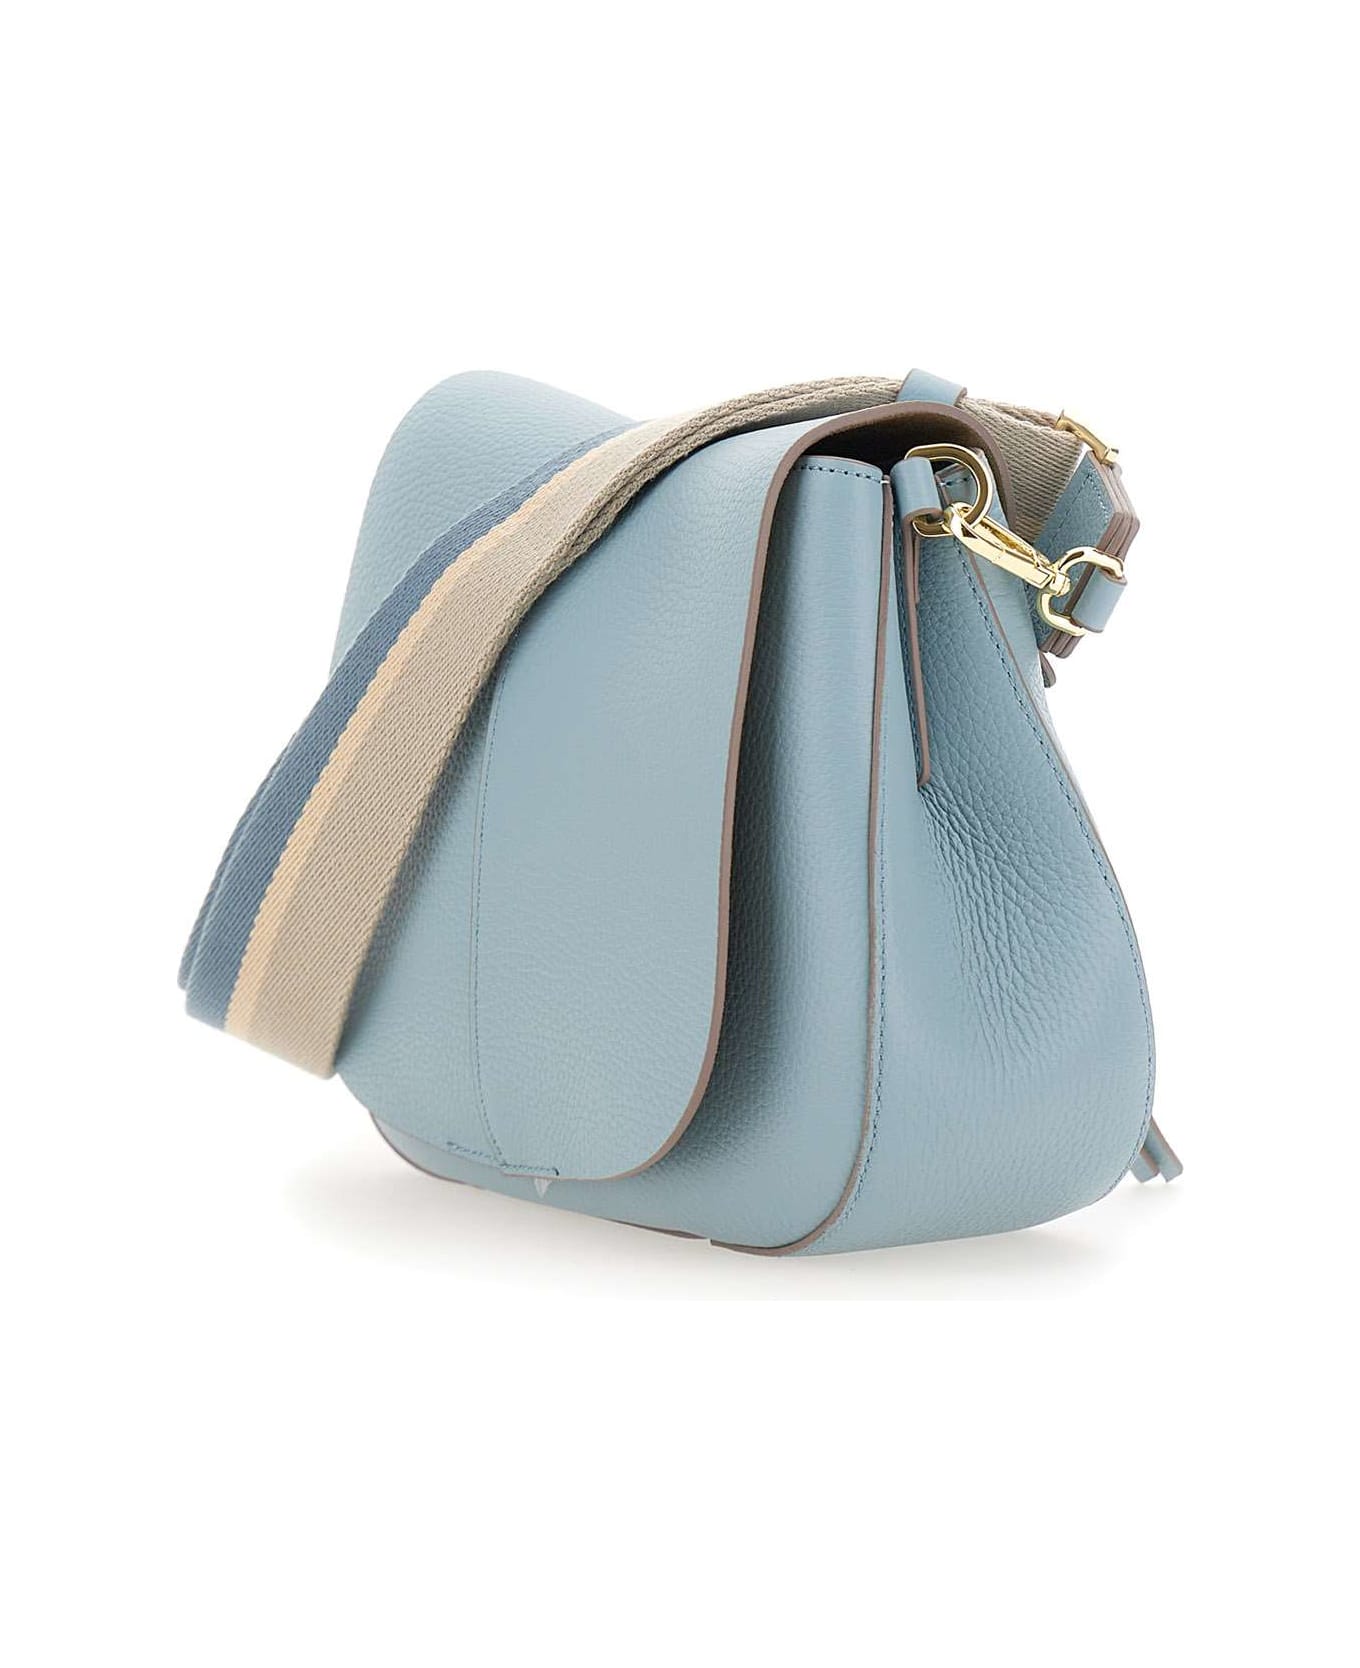 Gianni Chiarini "helena Round" Leather Bag - LIGHT BLUE